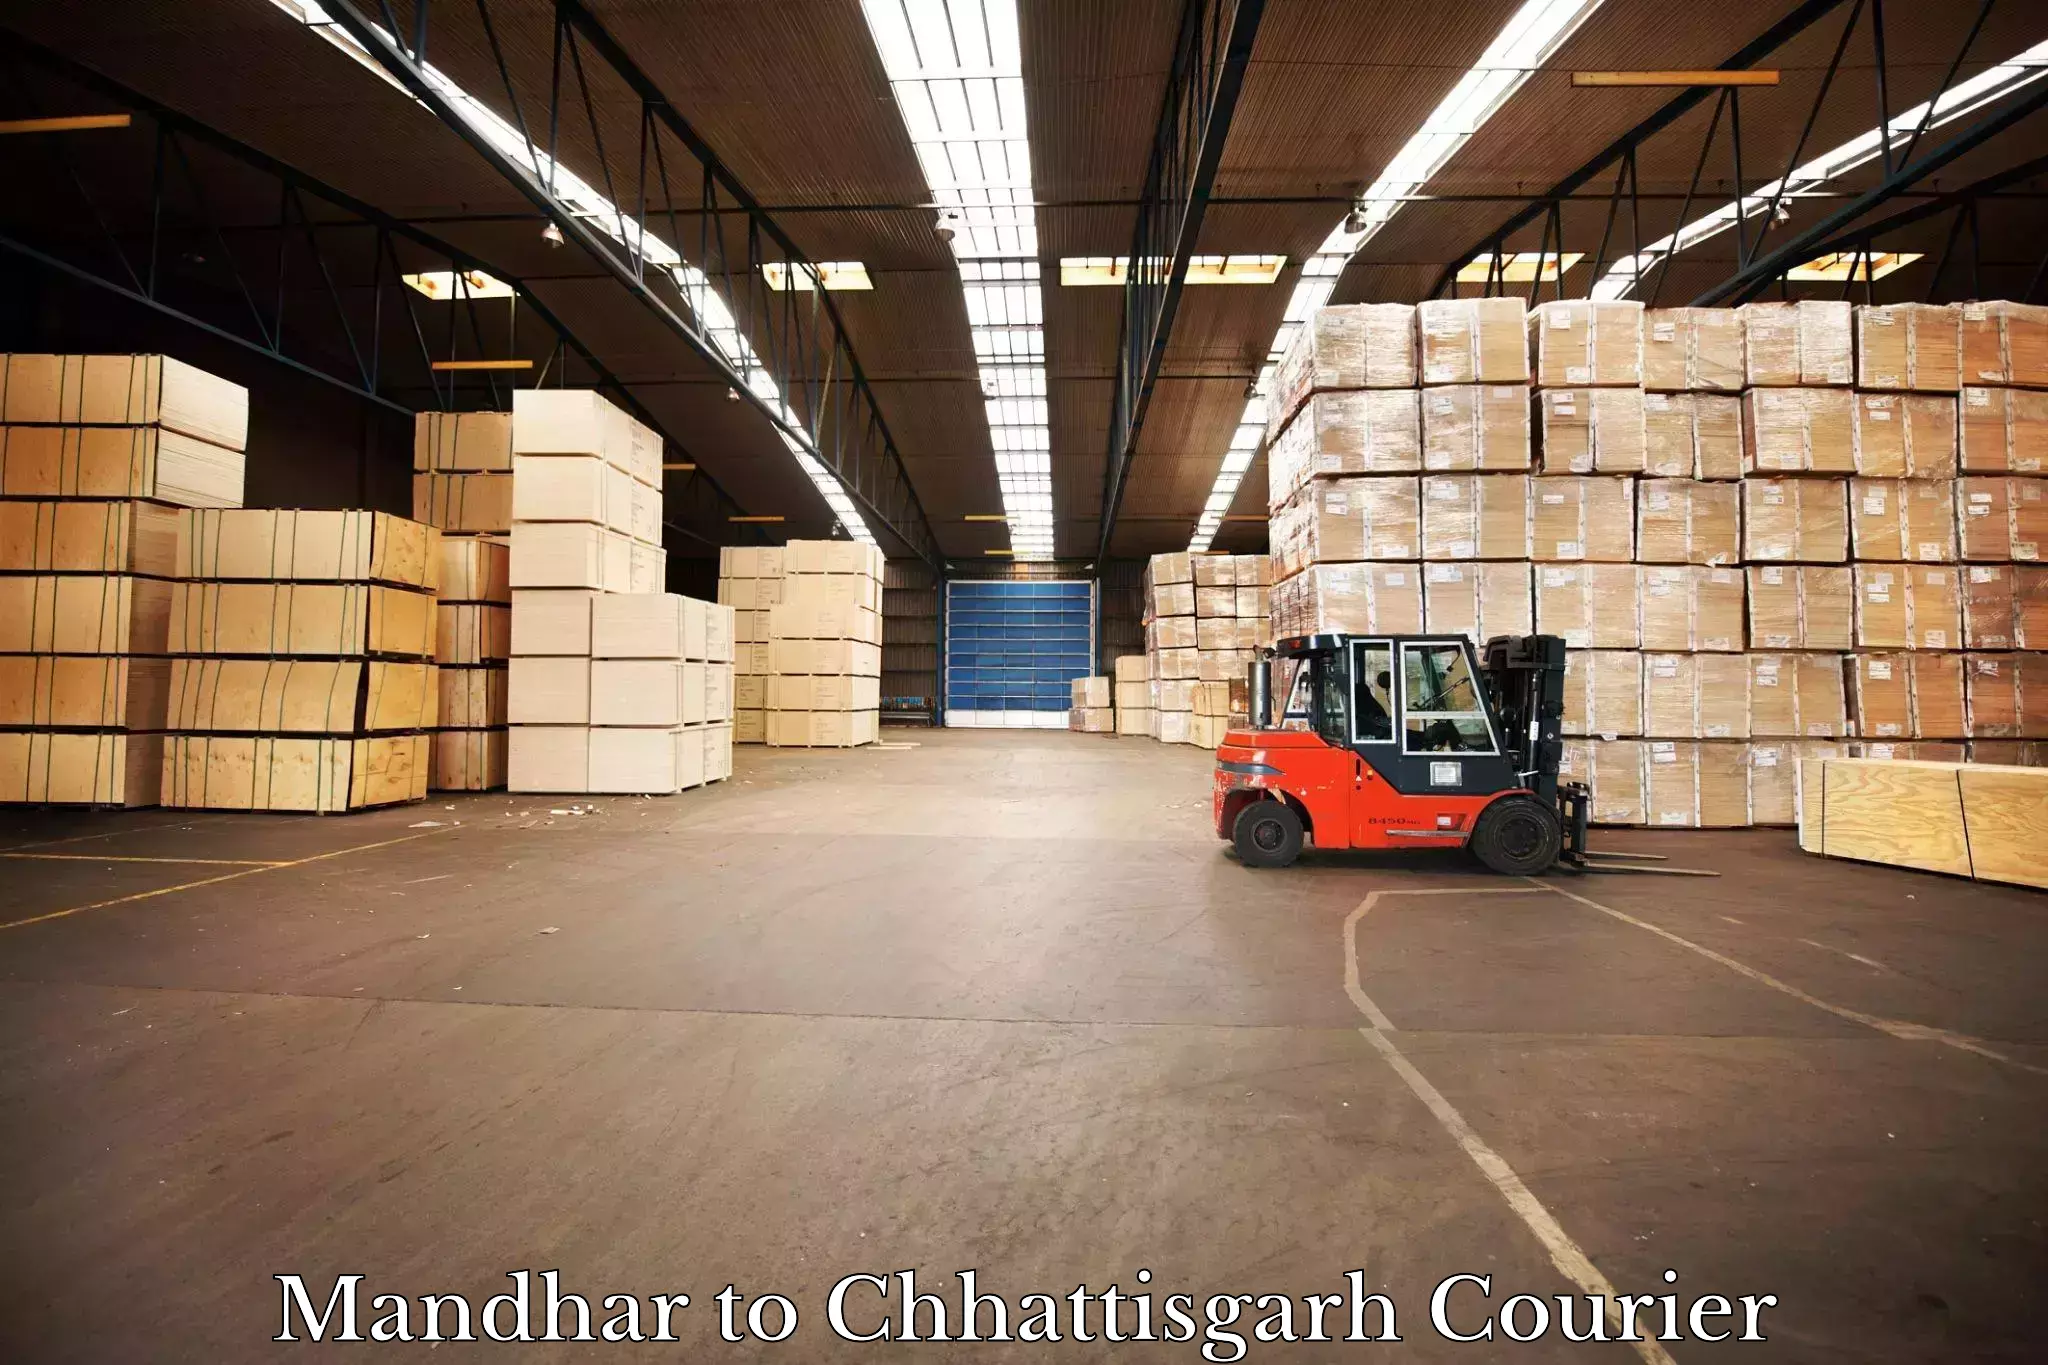 Next-day delivery options Mandhar to Patna Chhattisgarh